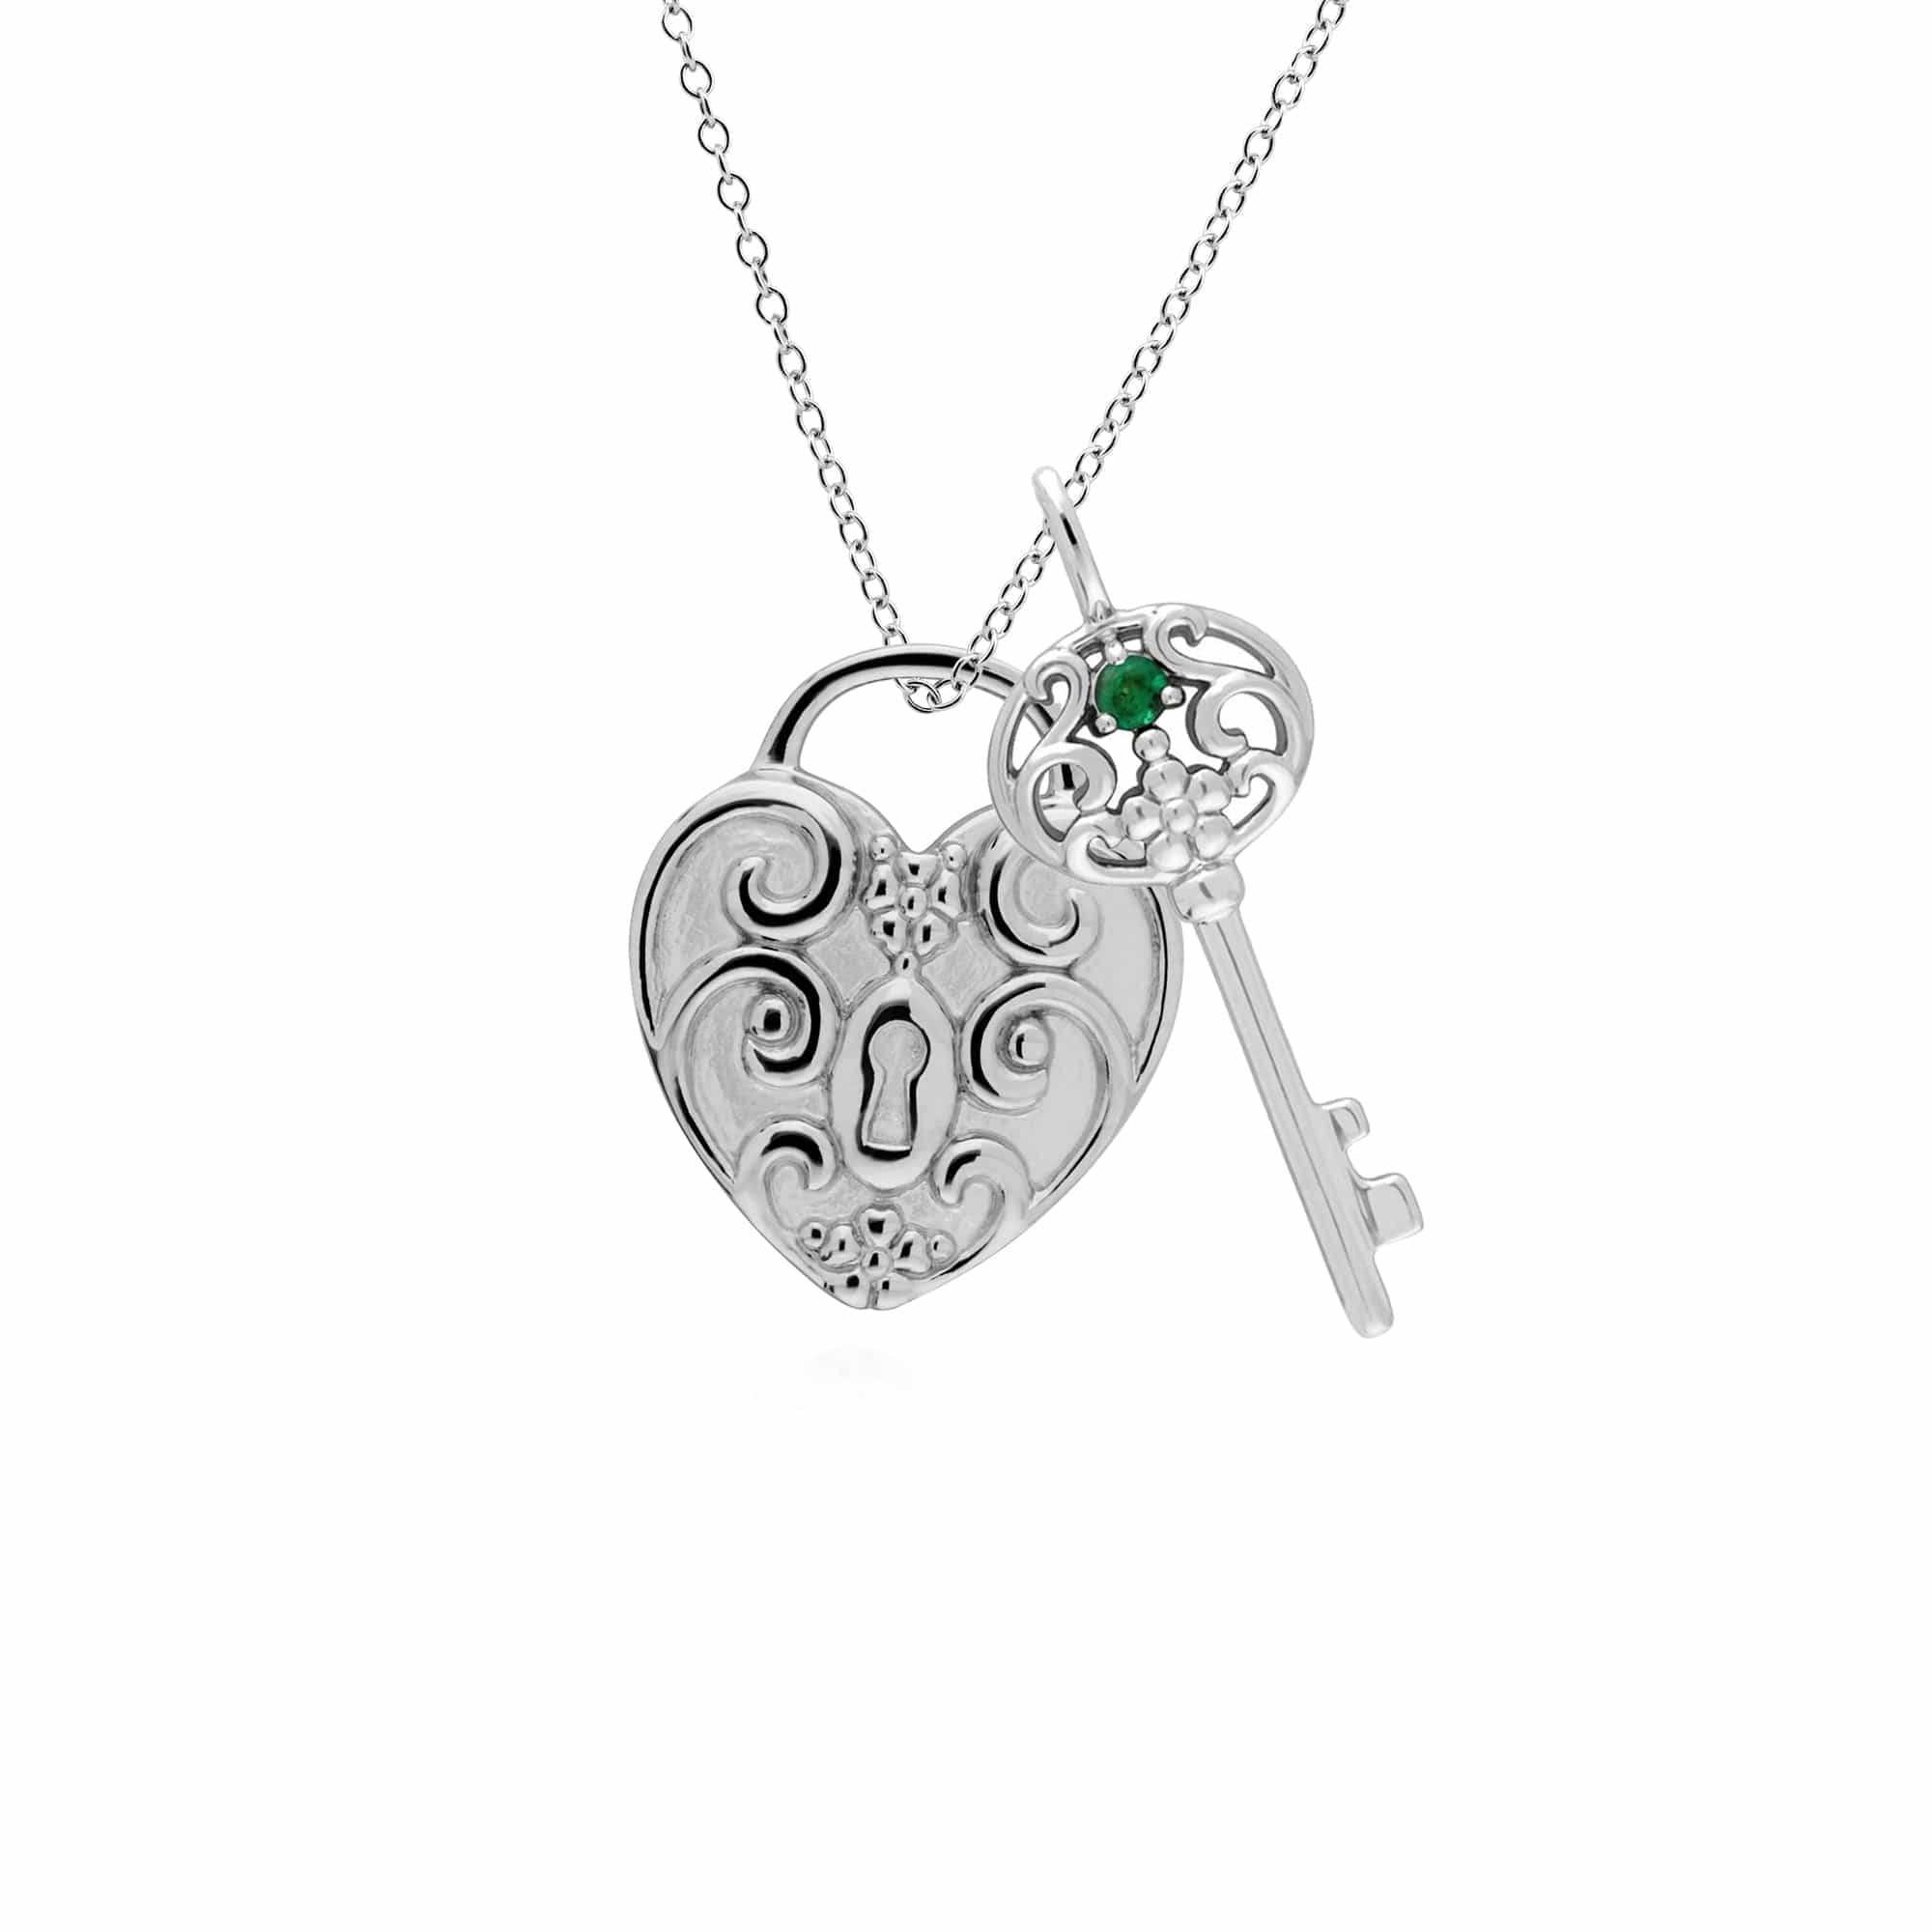 270P026807925-270P026601925 Classic Swirl Heart Lock Pendant & Emerald Big Key Charm in 925 Sterling Silver 1